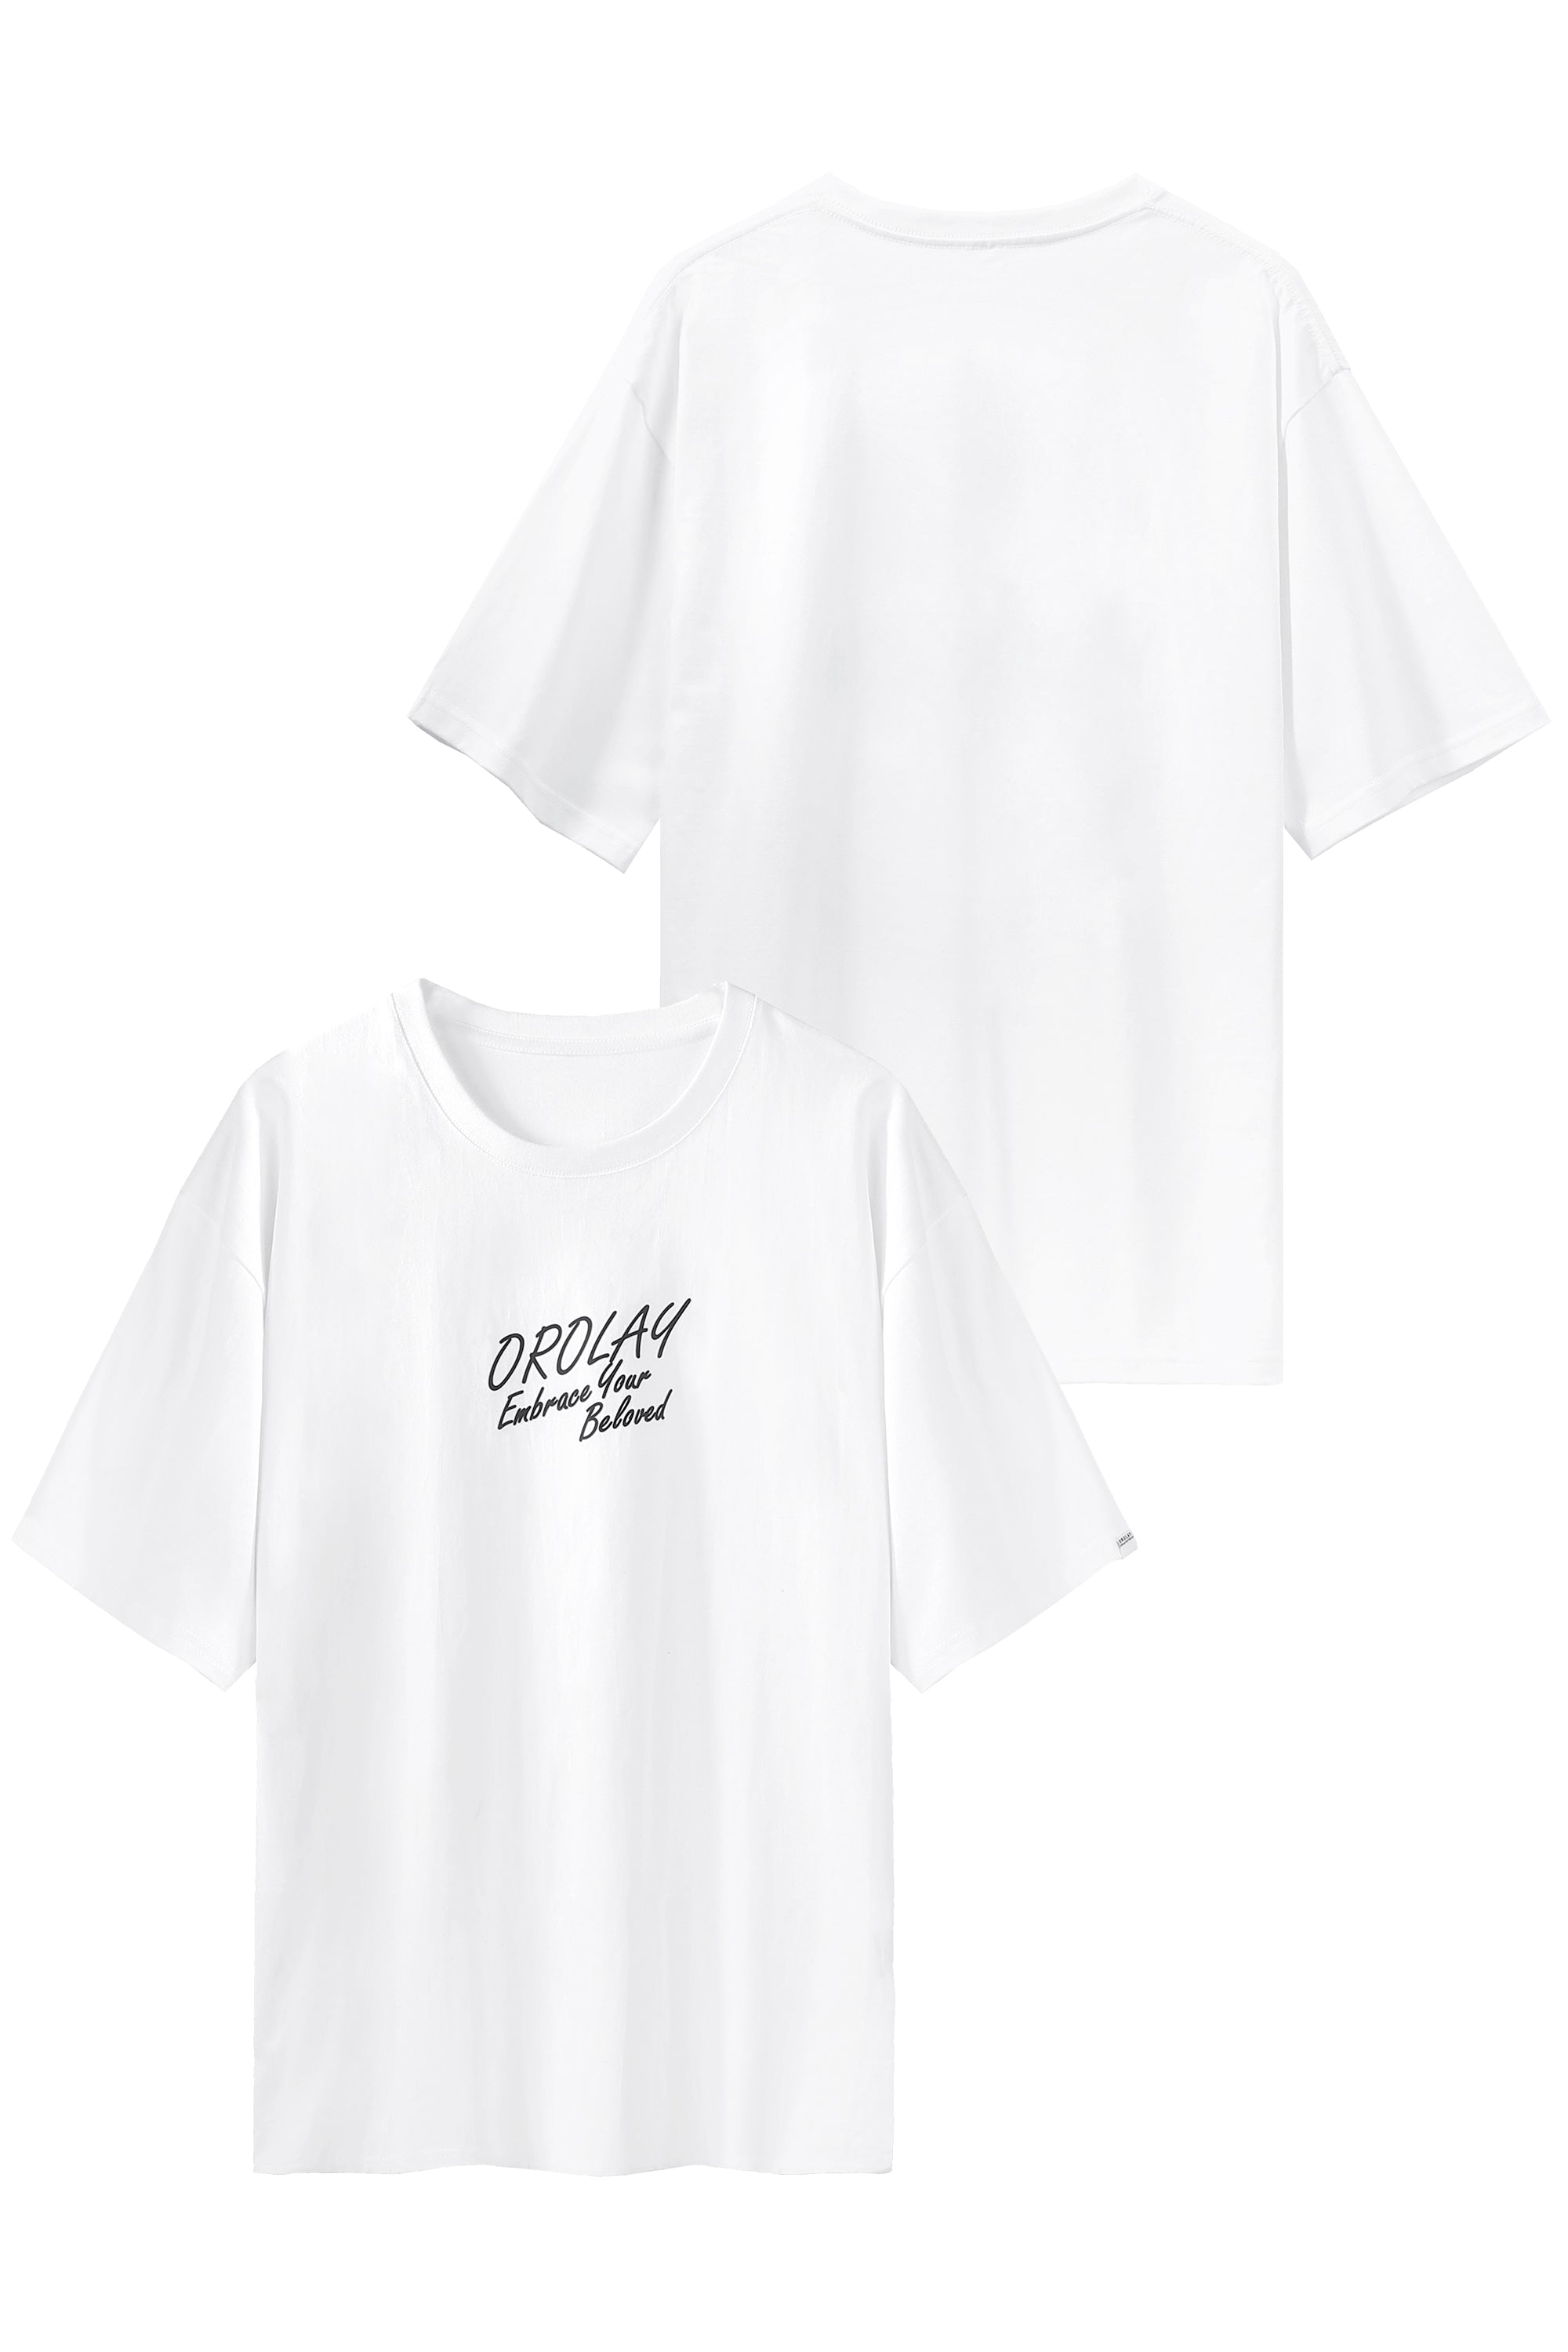 Crew Neck Cotton Casual T-shirt